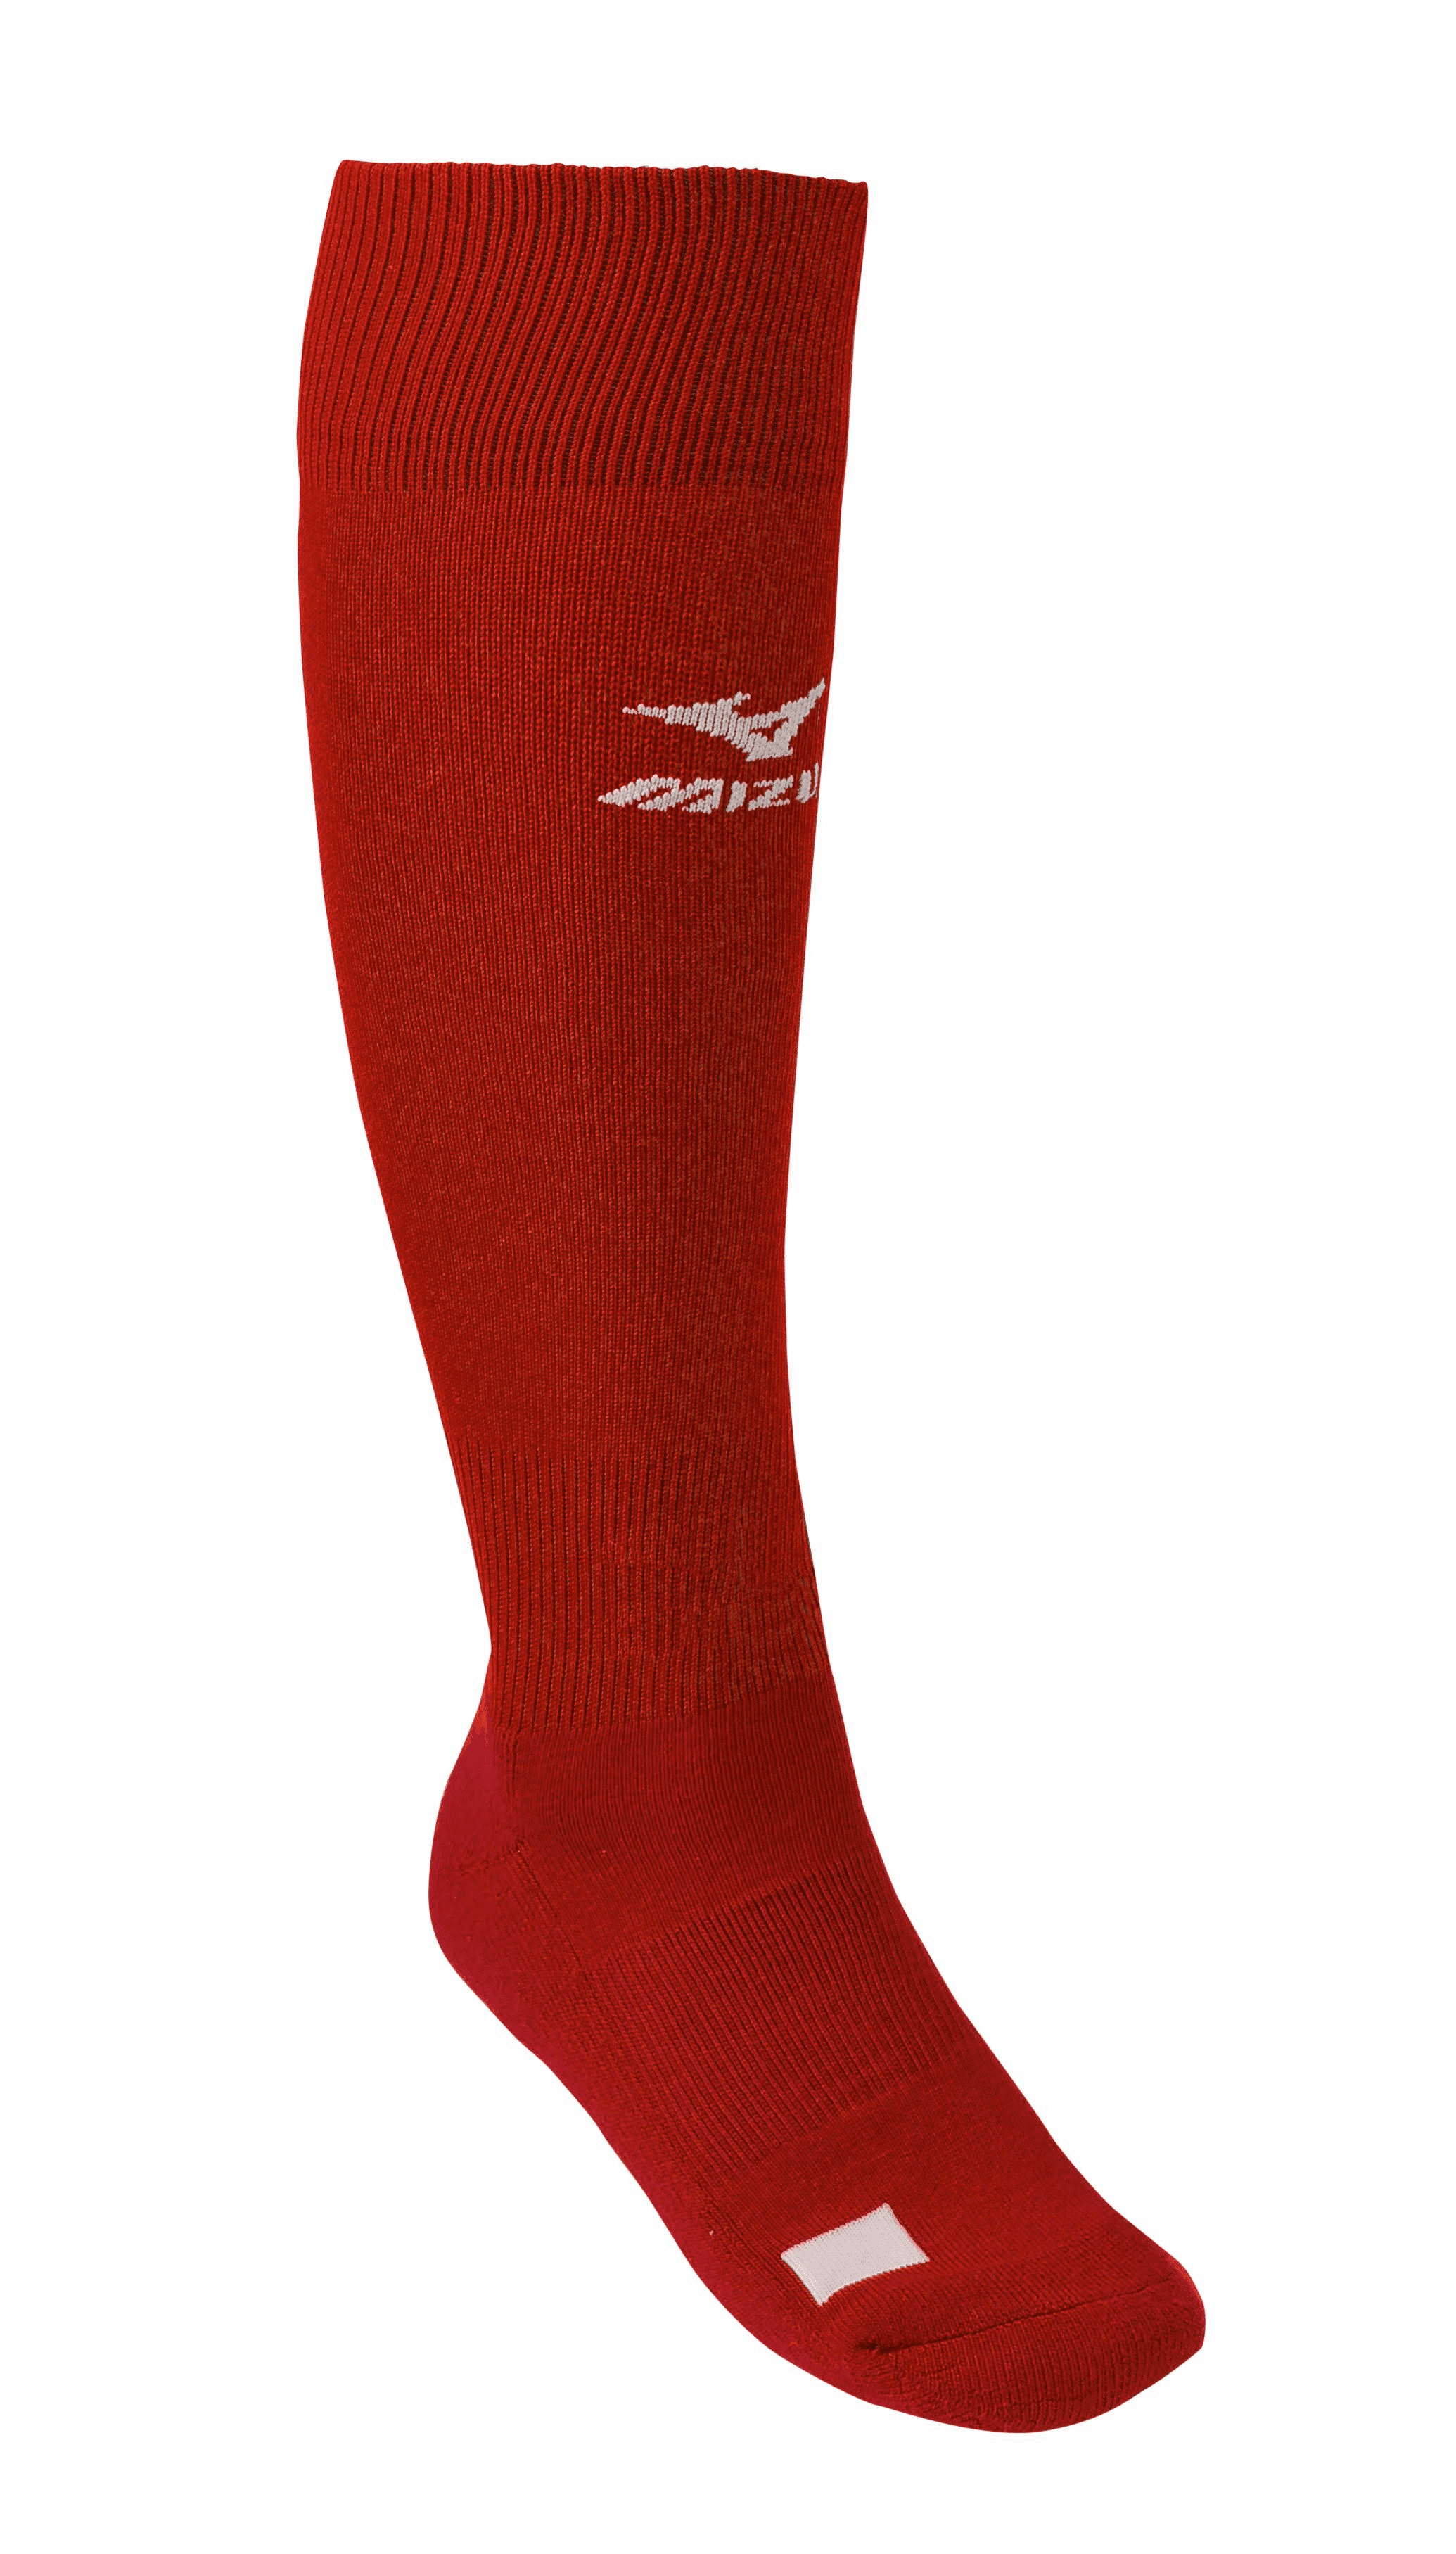 Hengguang 3 Pairs Anti Slip Soccer Socks for Kids, Grip Socks